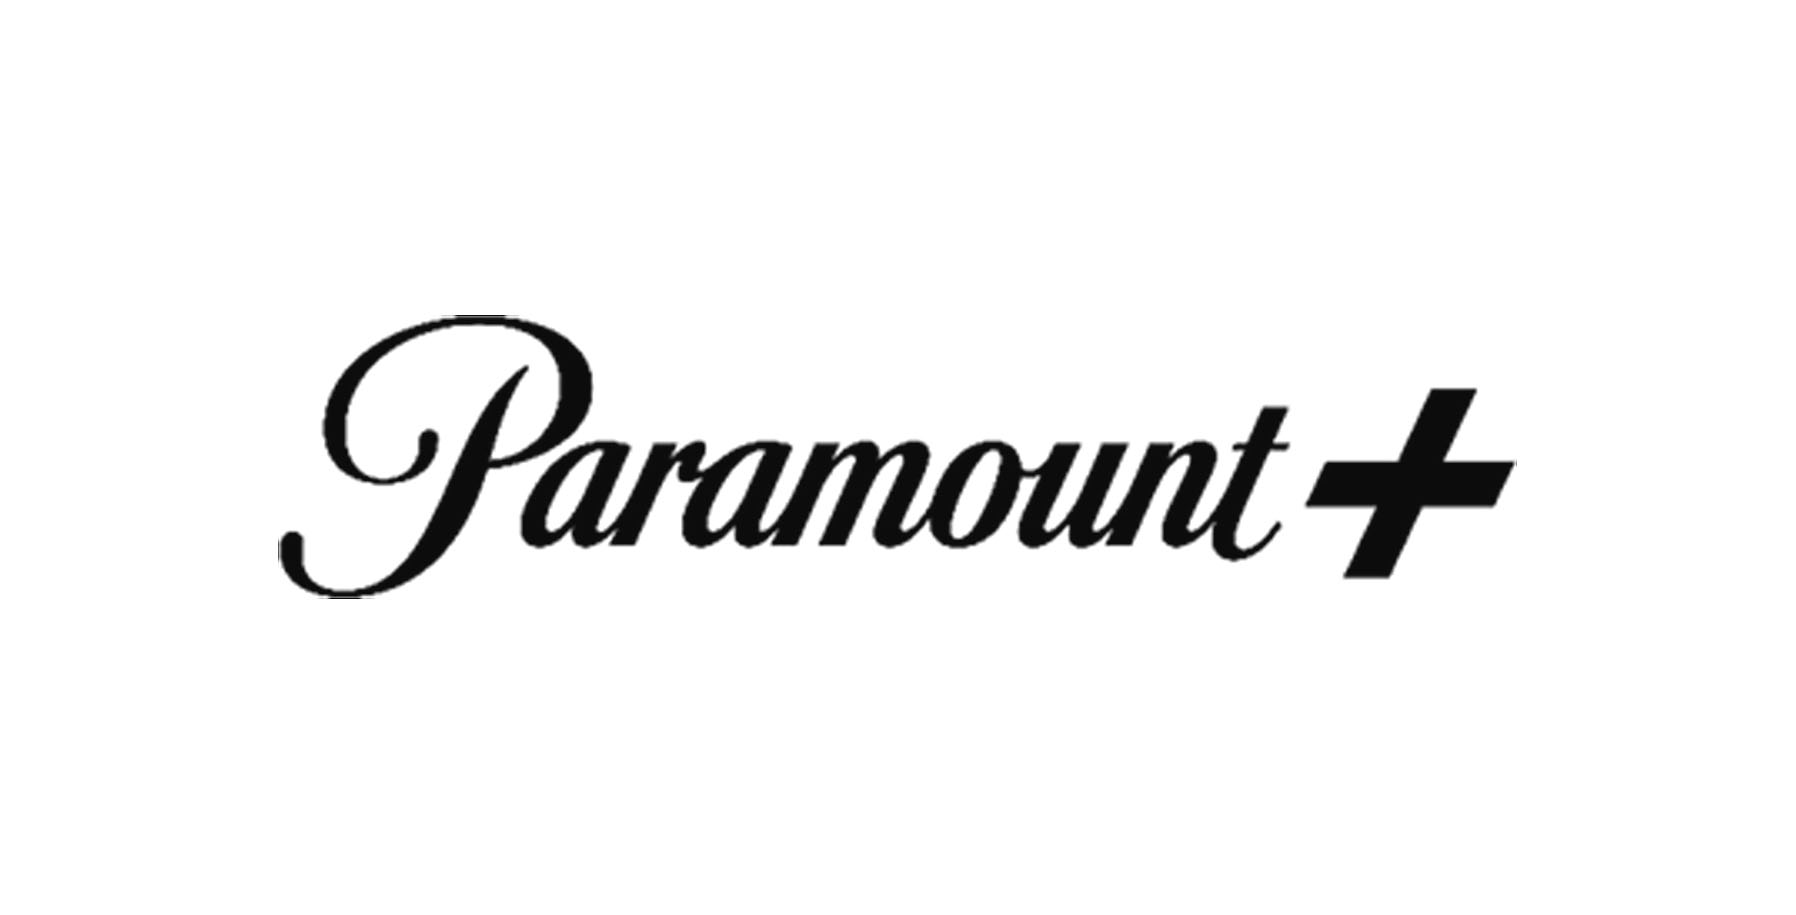 Paramount. 